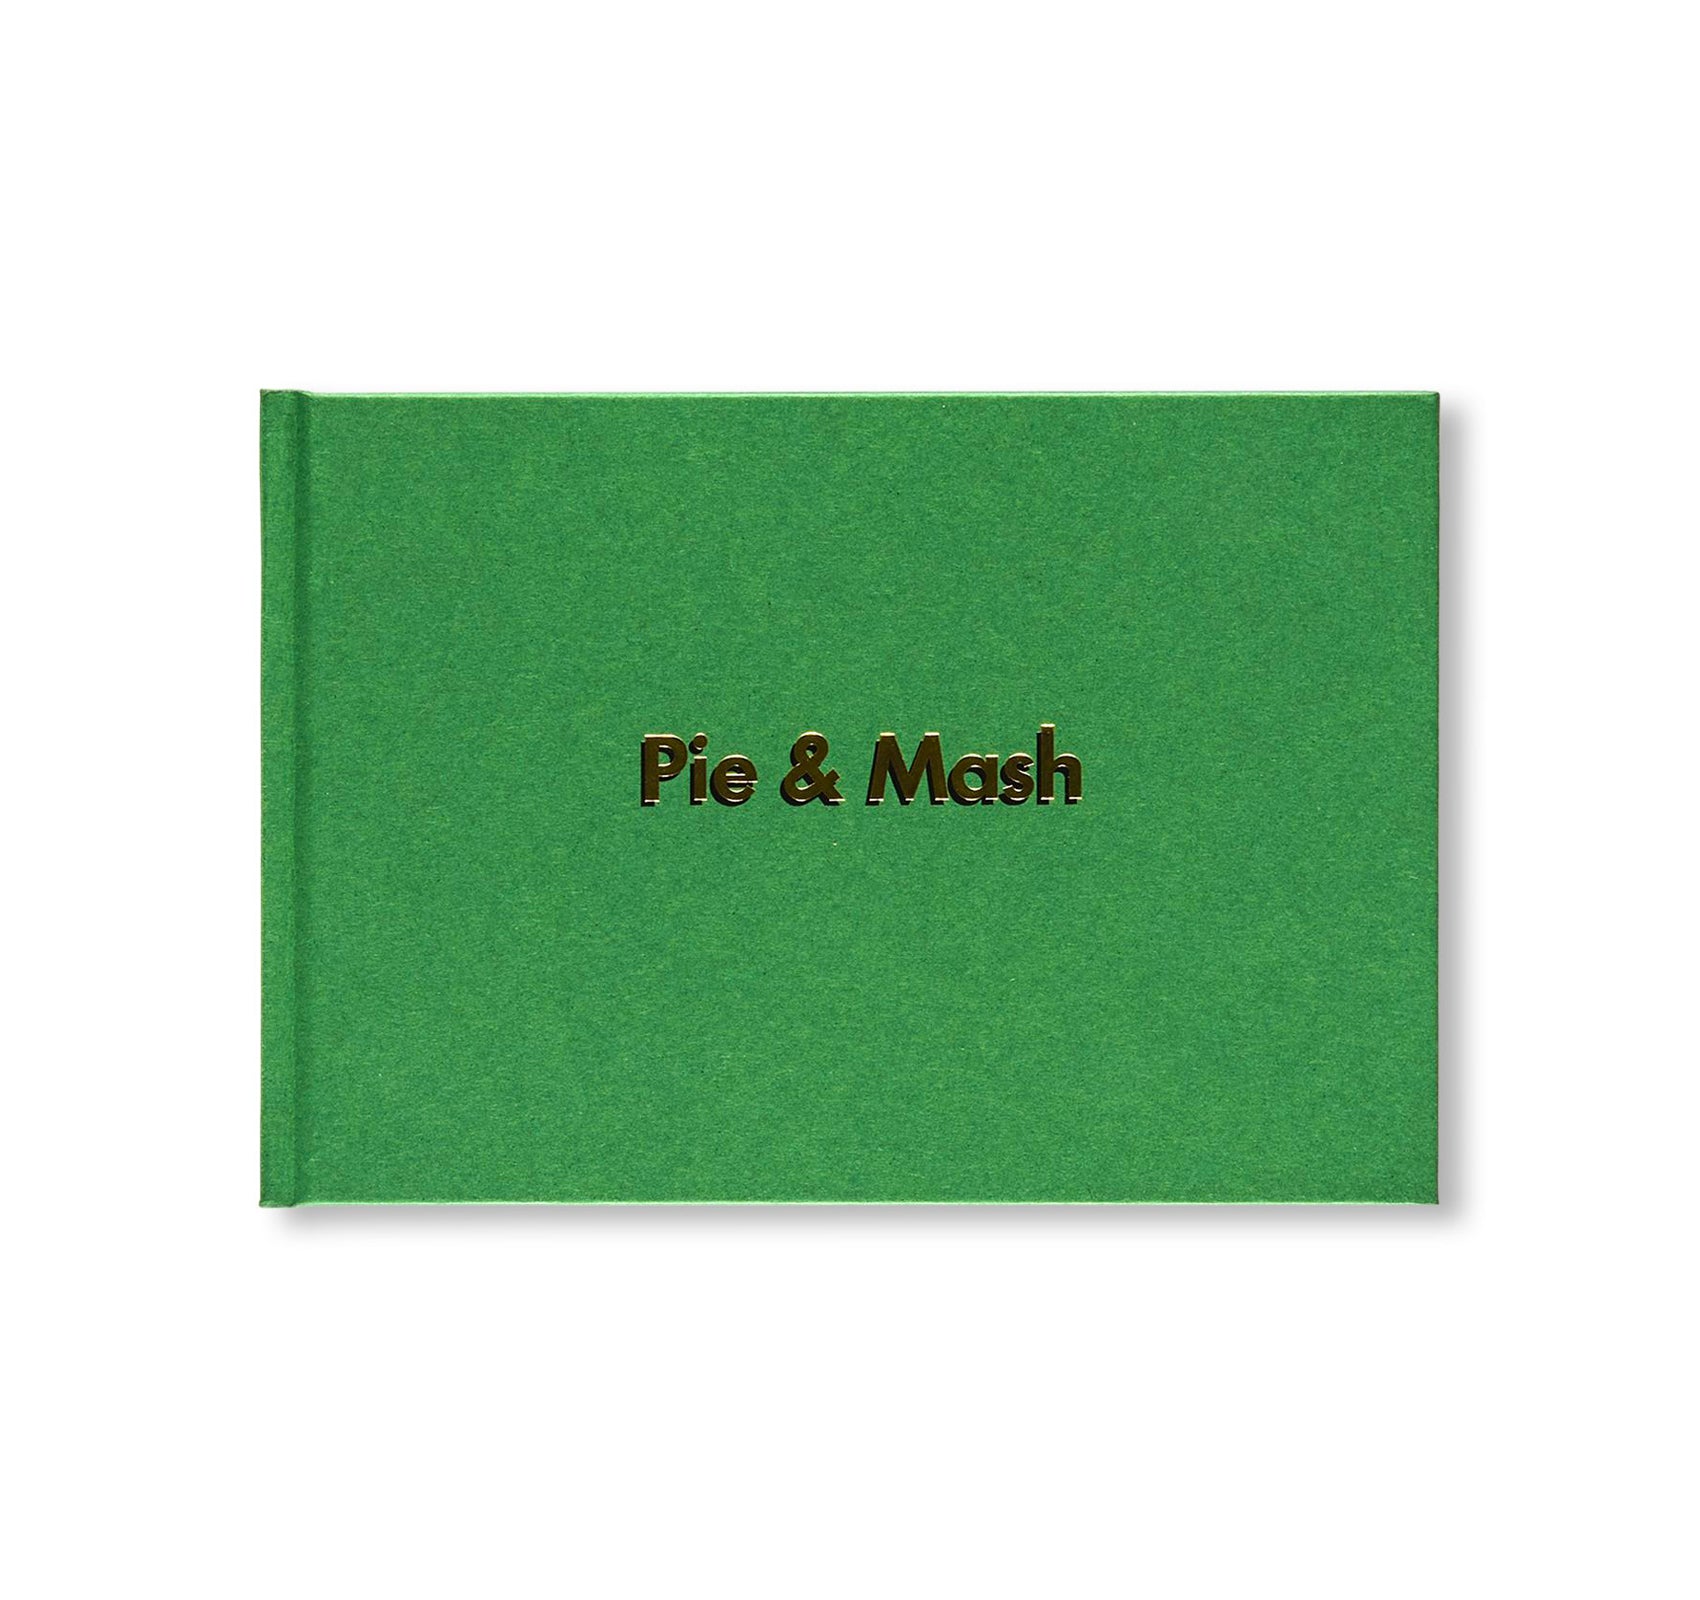 PIE & MASH by Jake Green